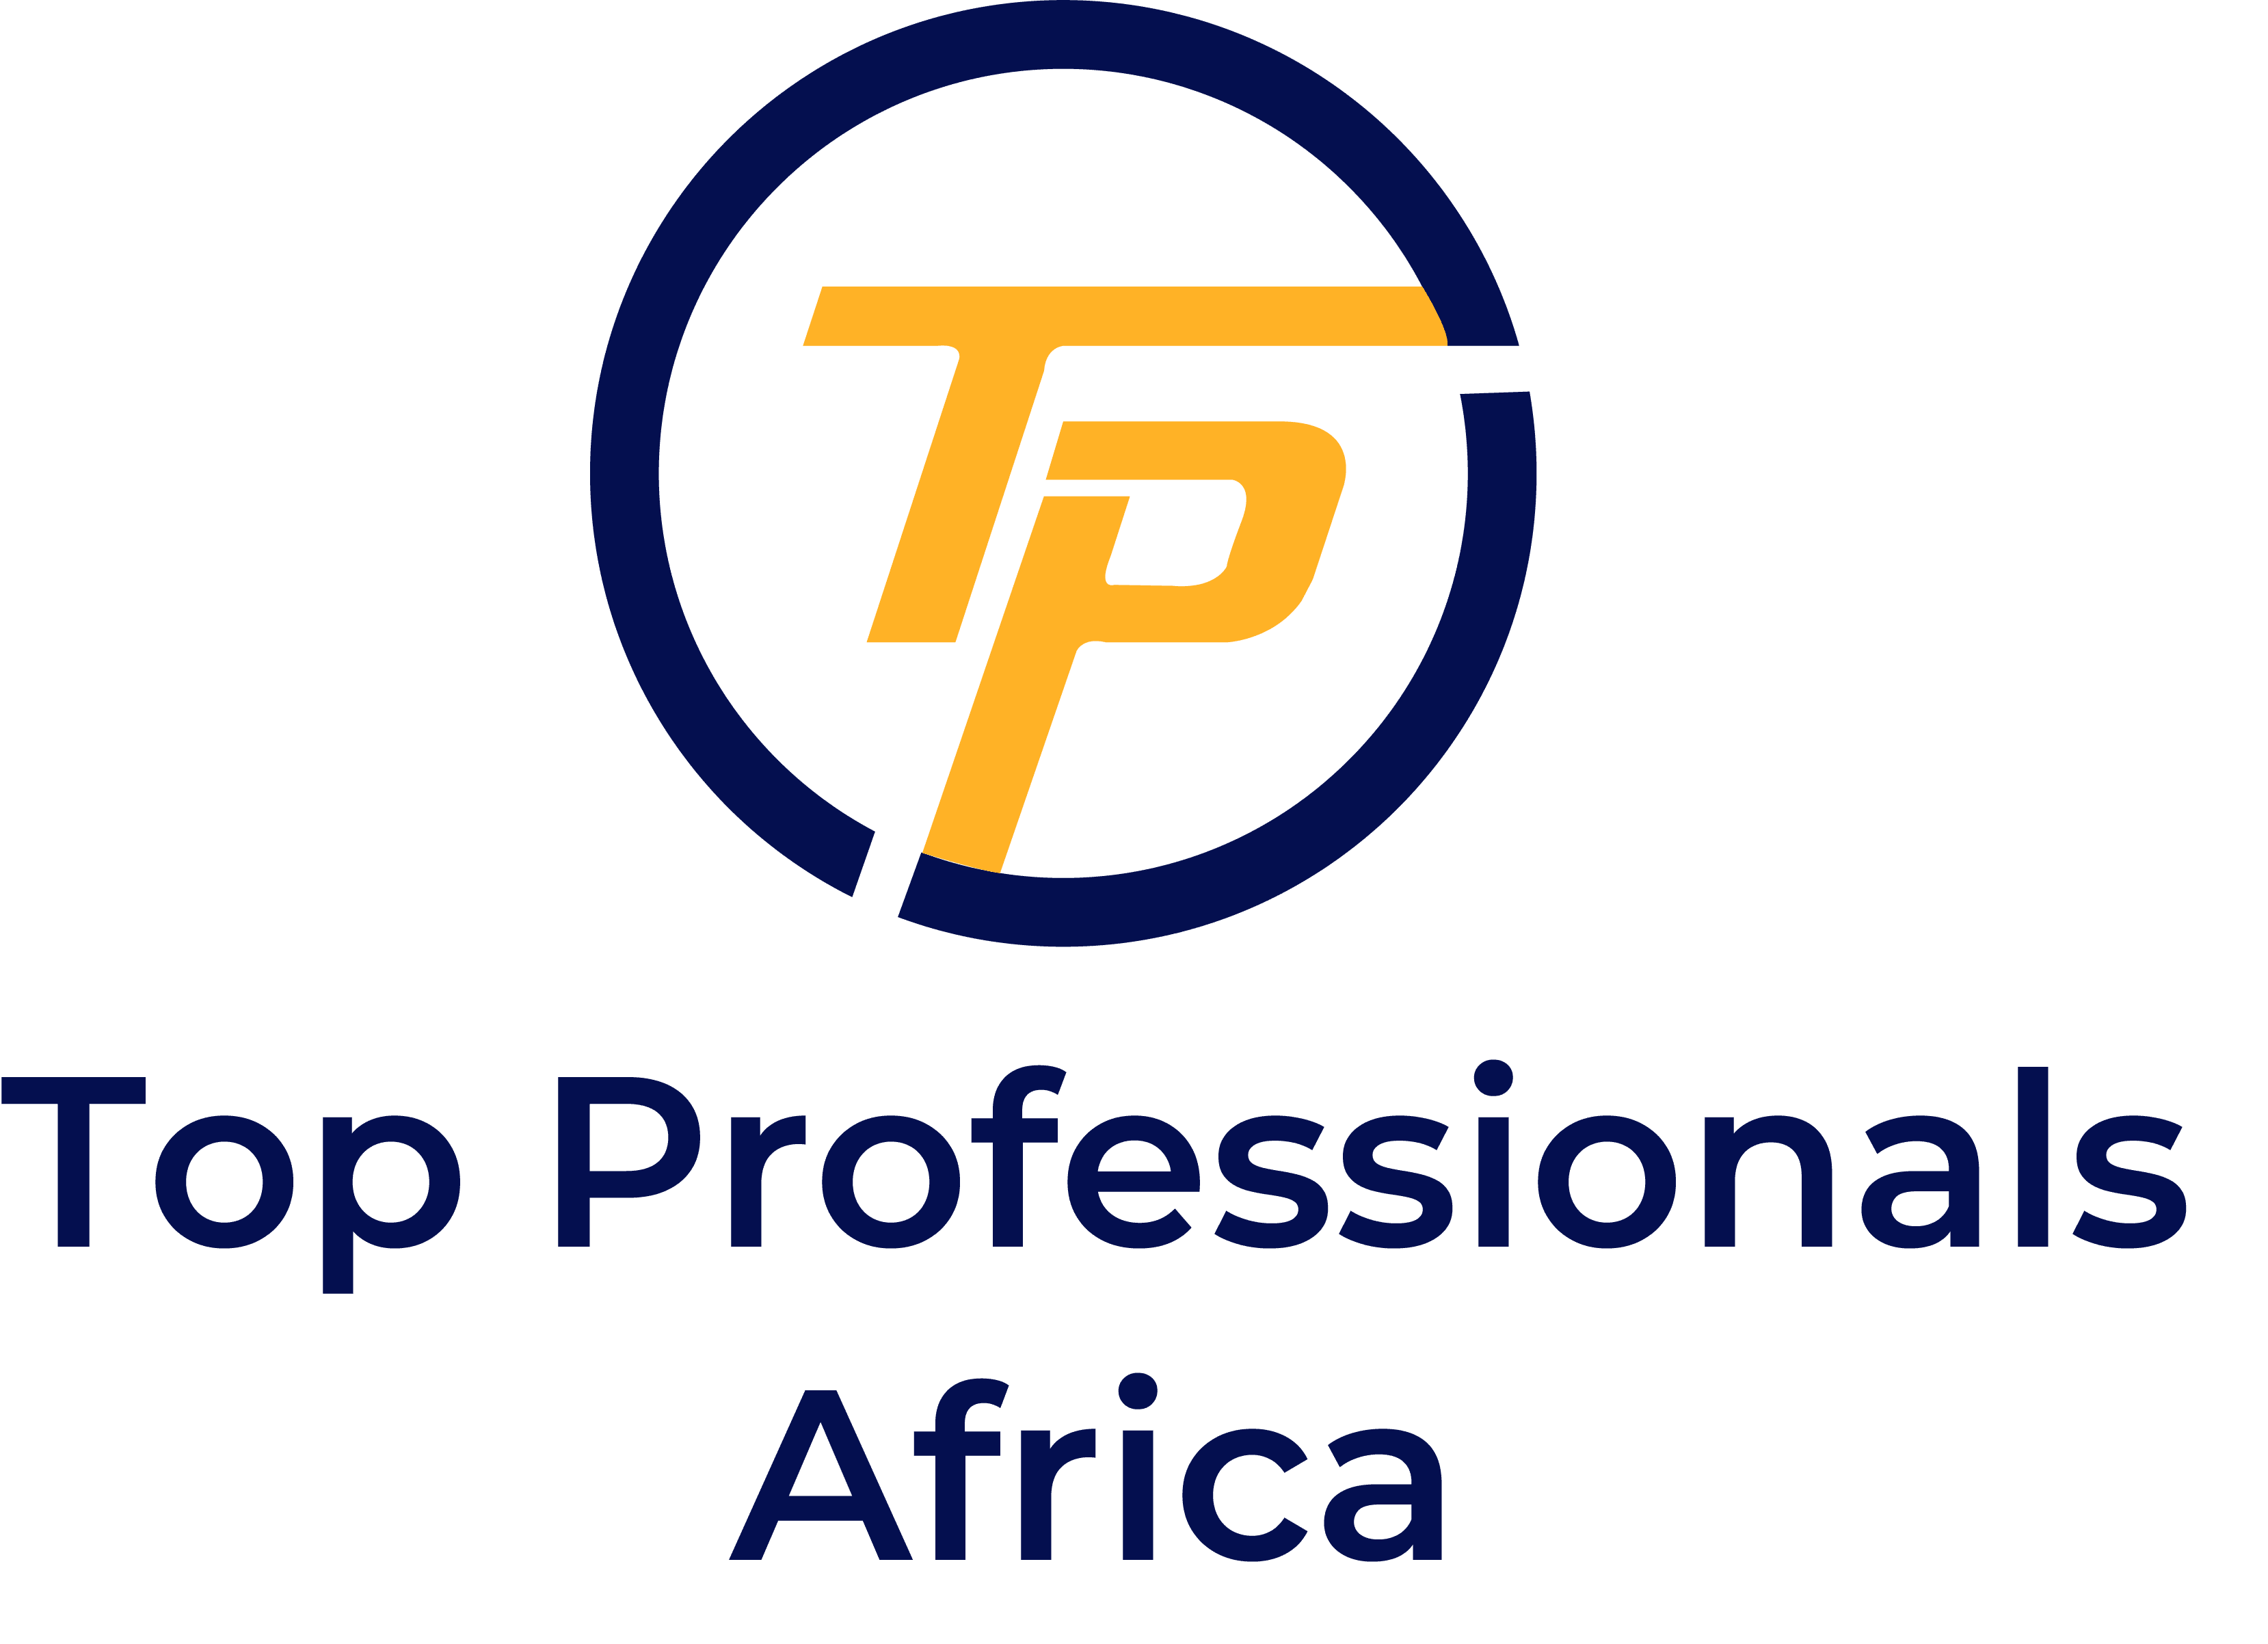 Top Professionals Africa